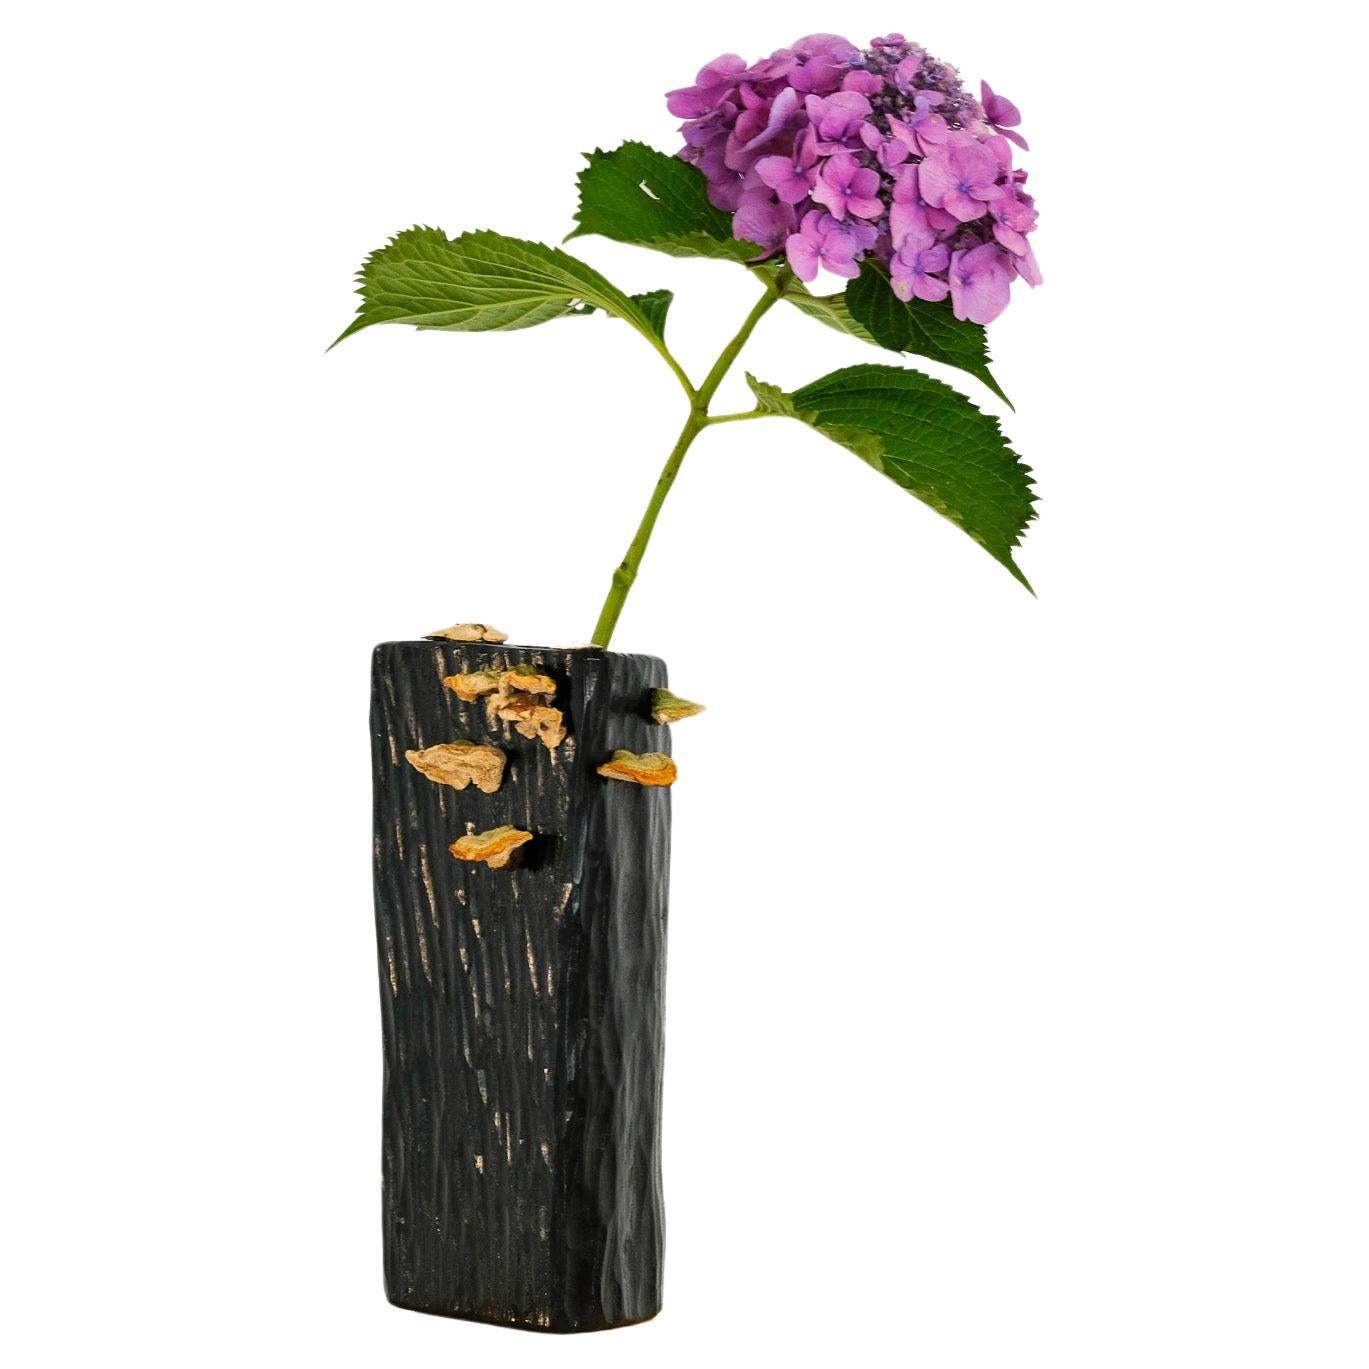 "Fungi Pot #5" One-Off Chestnut Wood Vase with Mushrooms by Tony Manara 2023